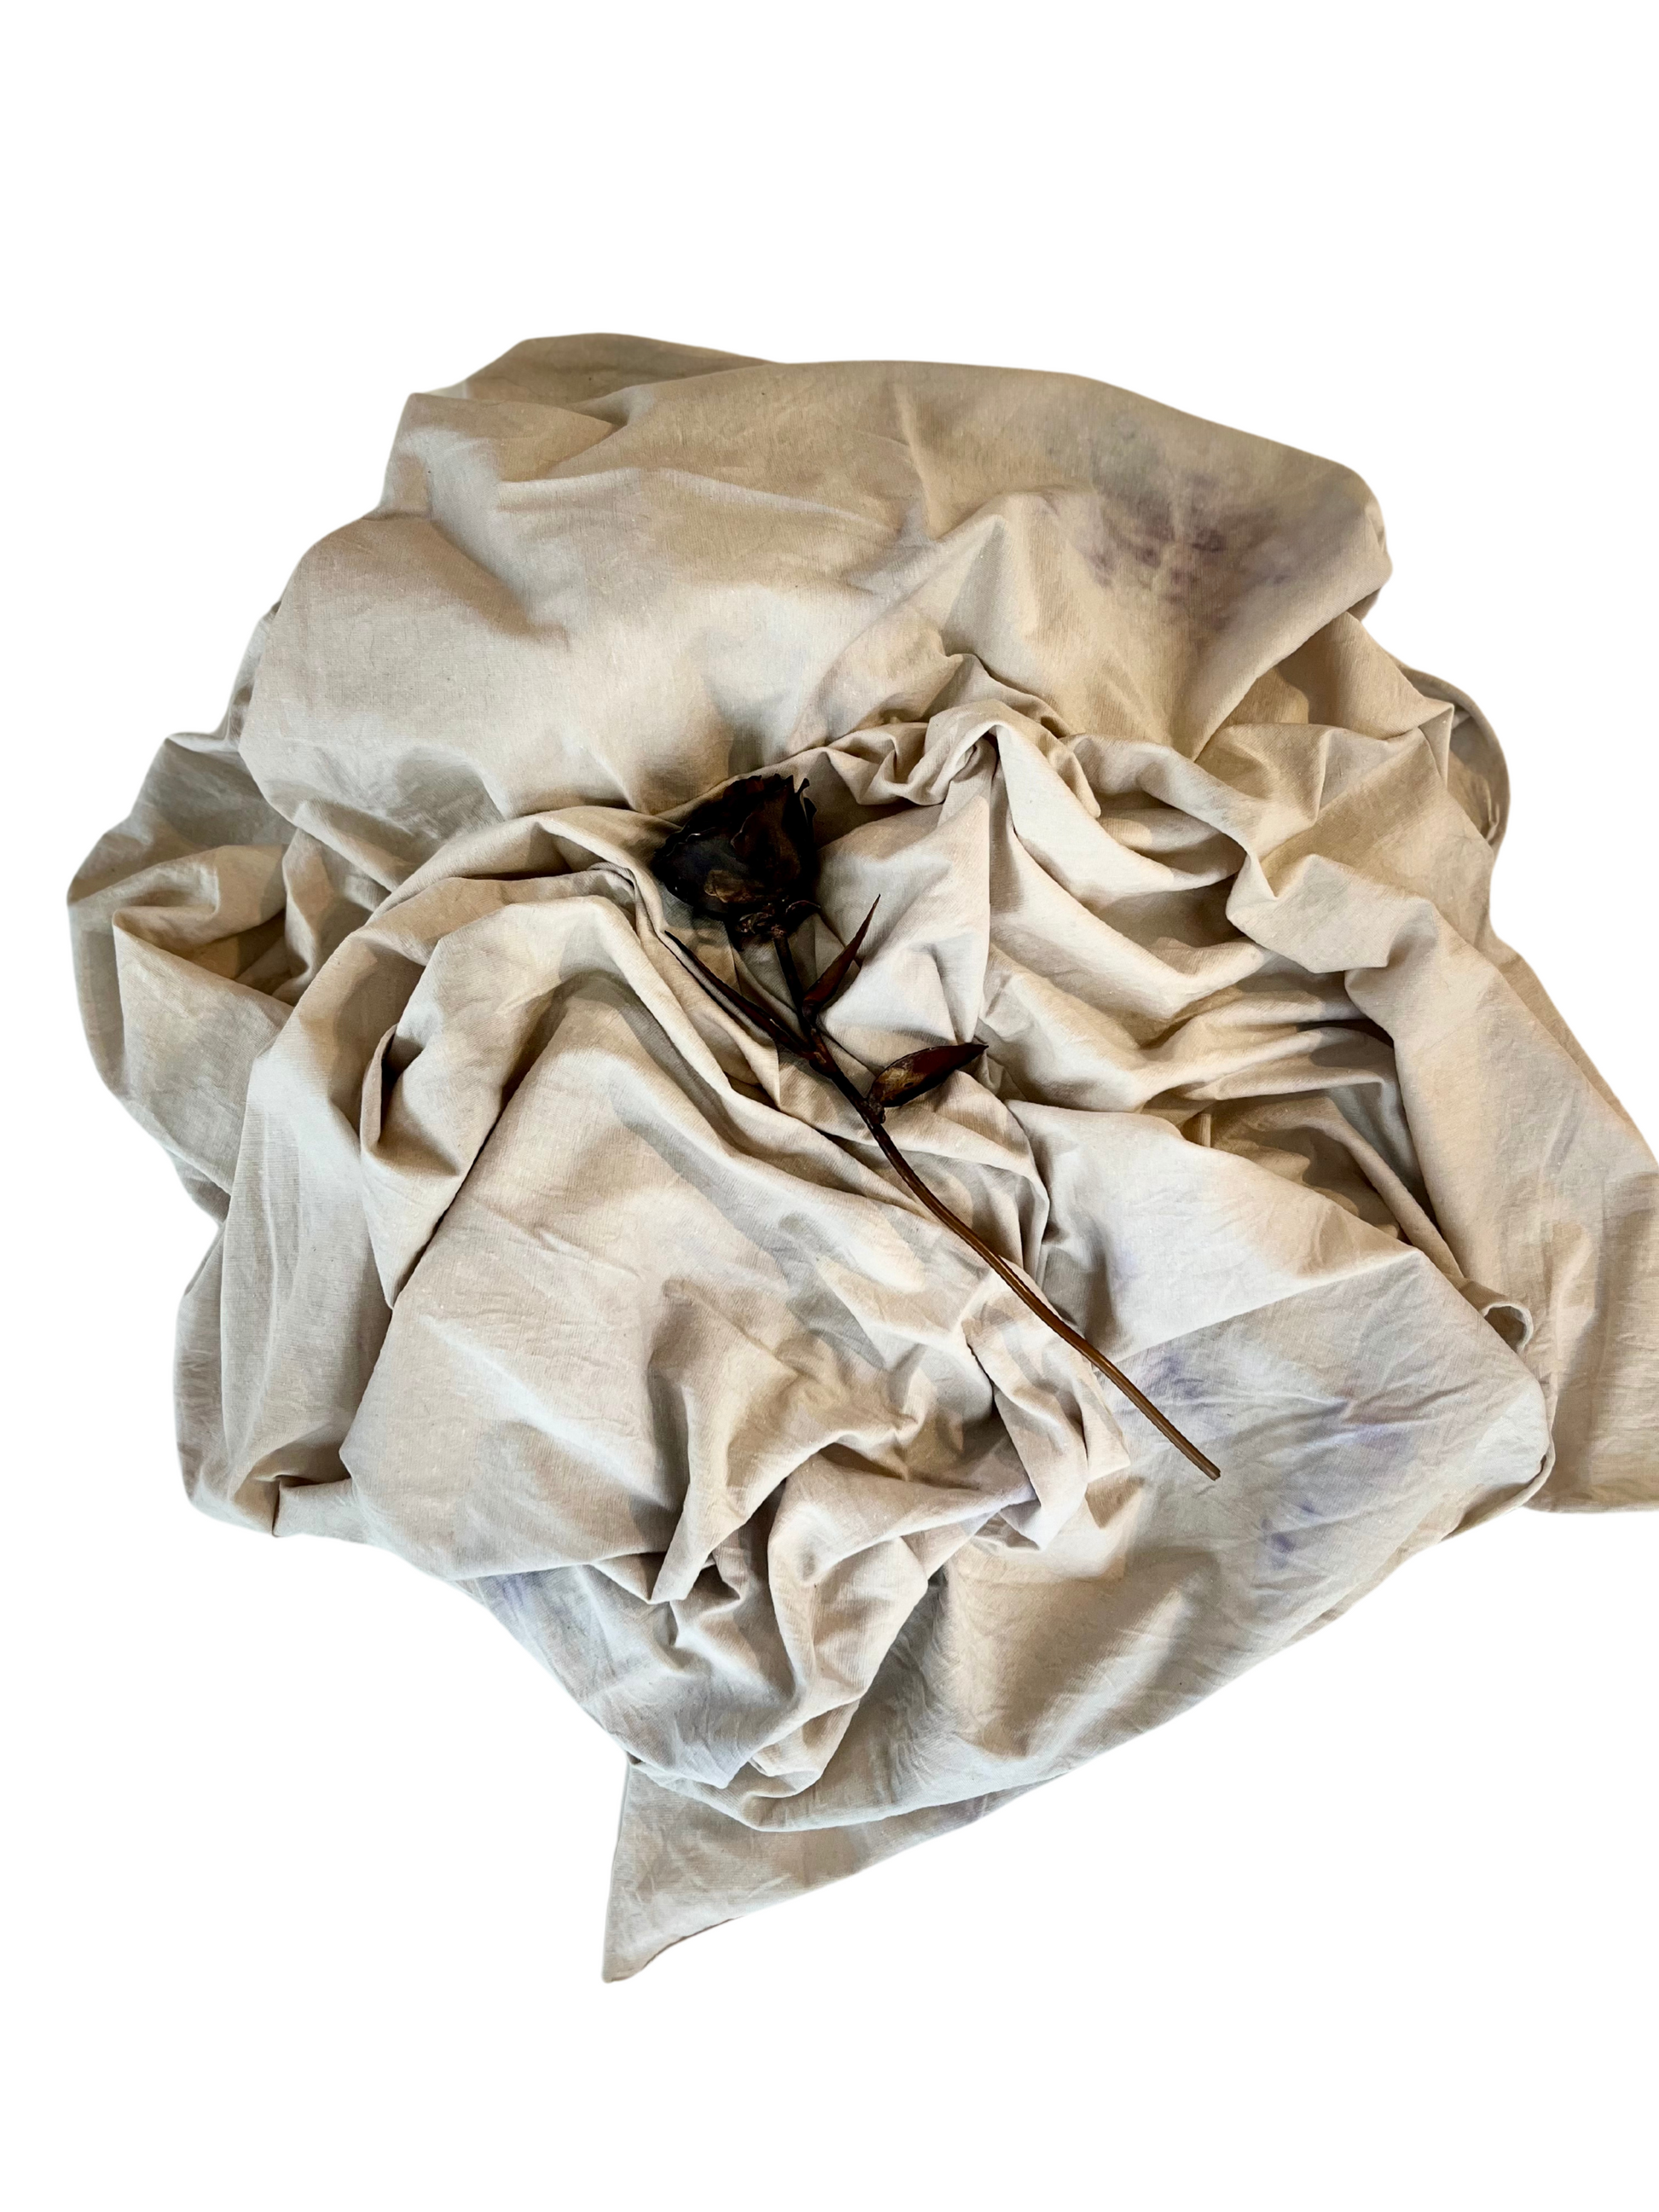 SANCTUM biodegradable burial shroud